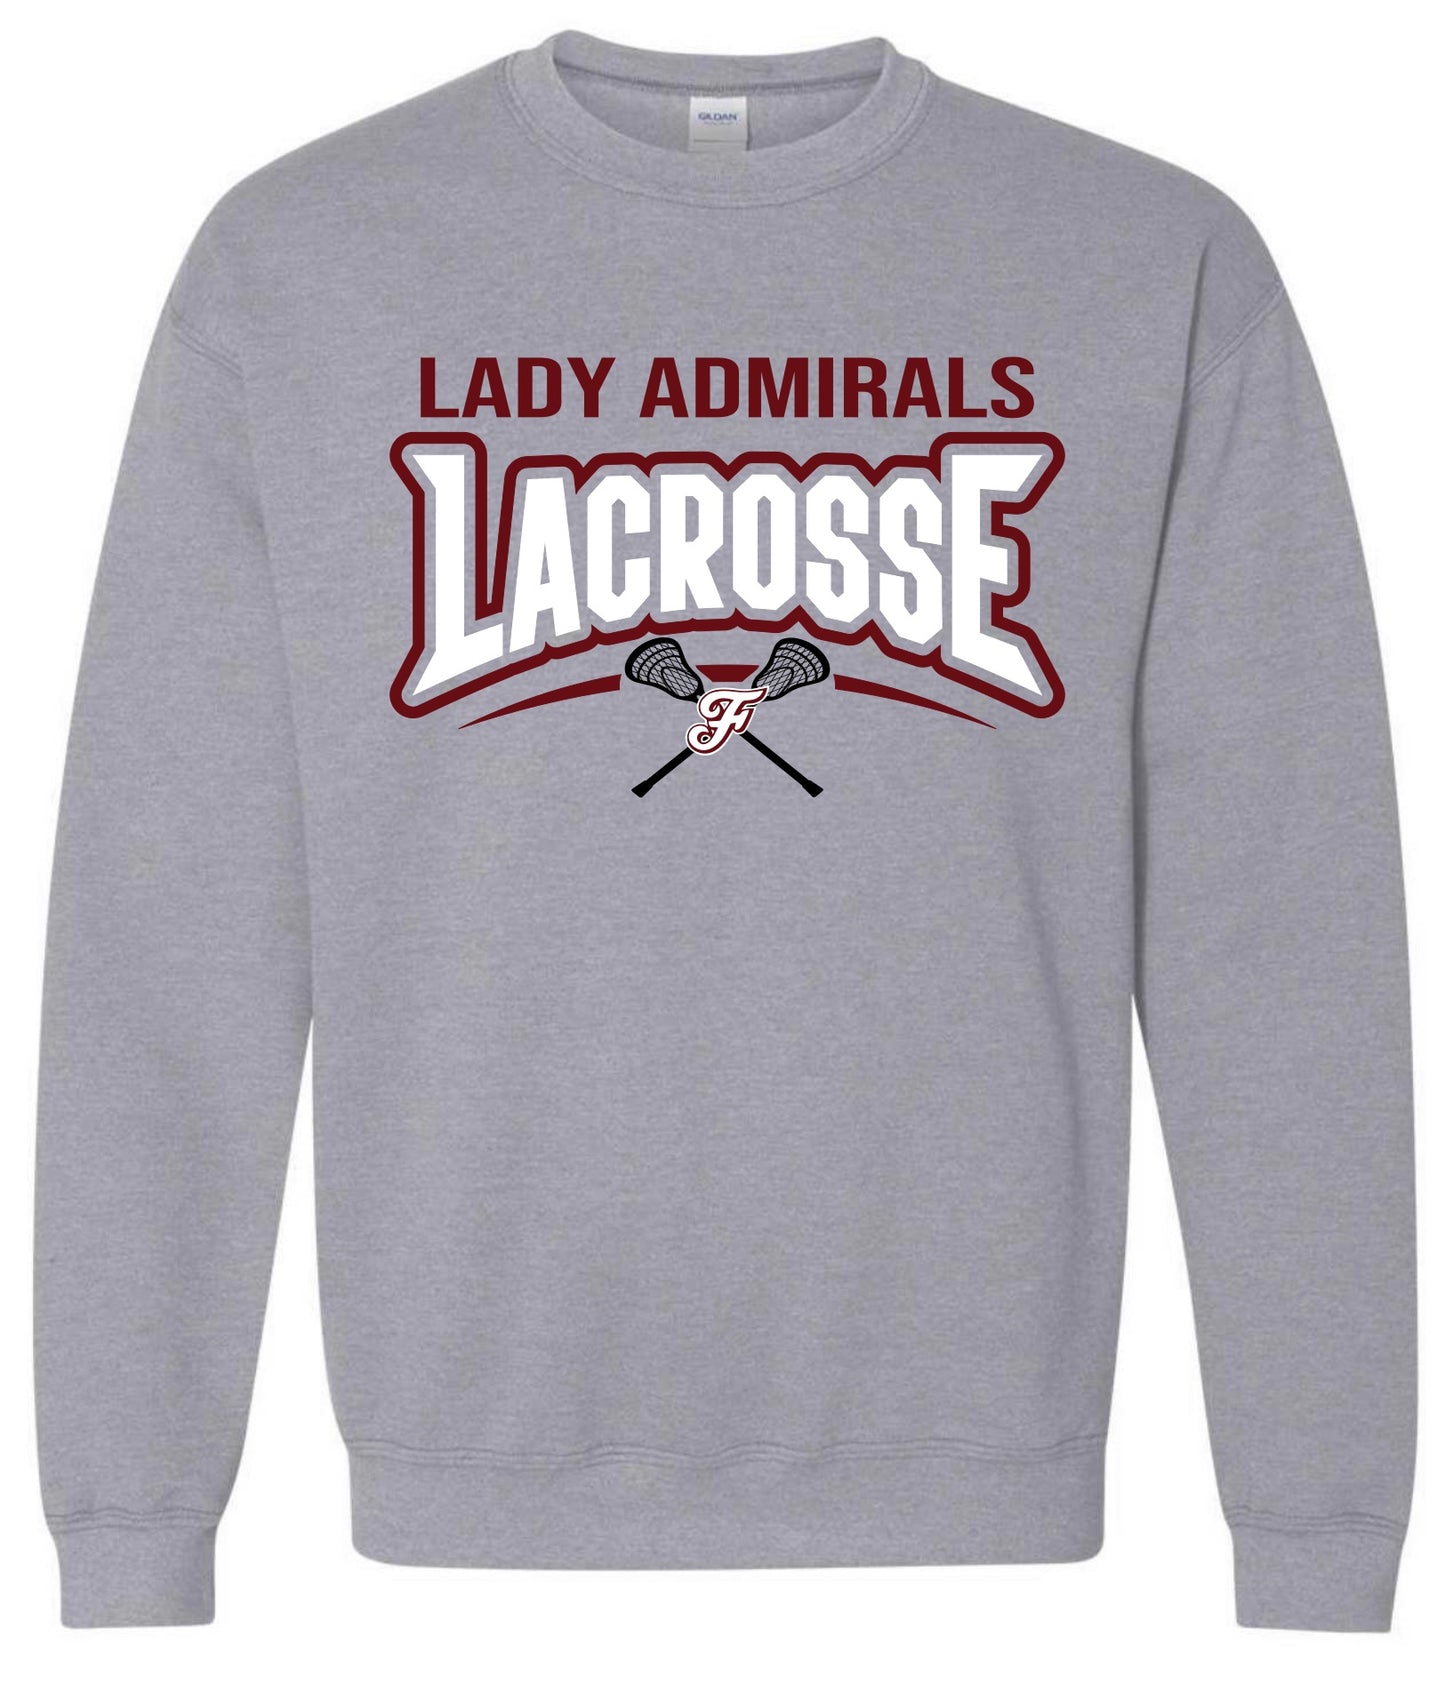 Lady Admirals Lacrosse Sweatshirt